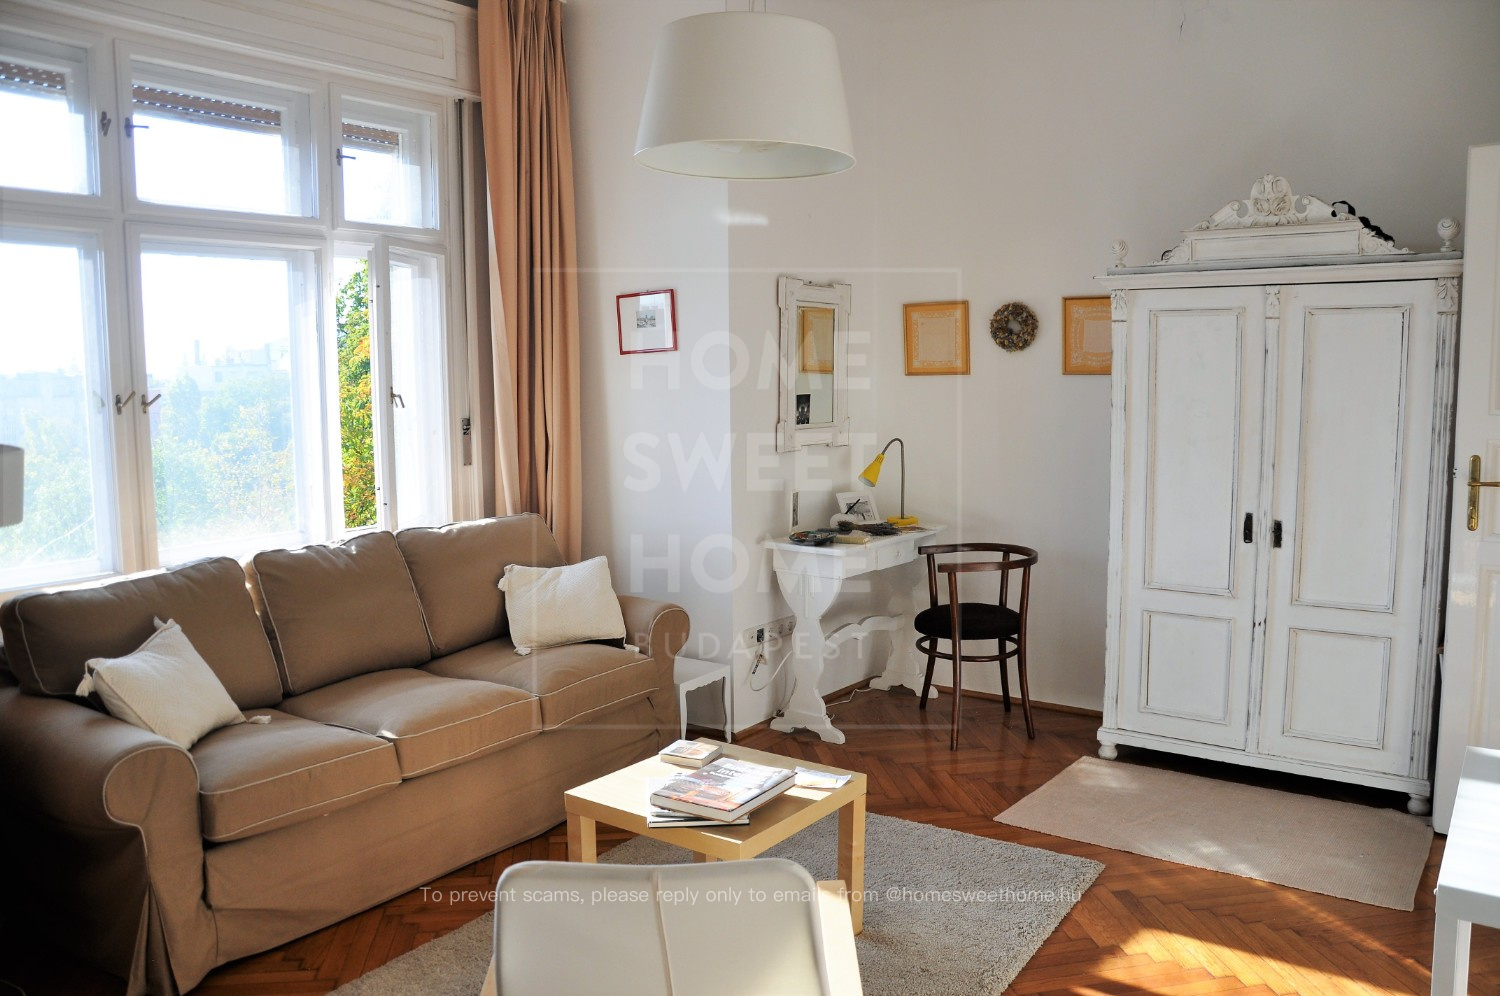 Budapestrent-cheap-budget-studio-apartment-for-rent-Budarent-lon.jpg